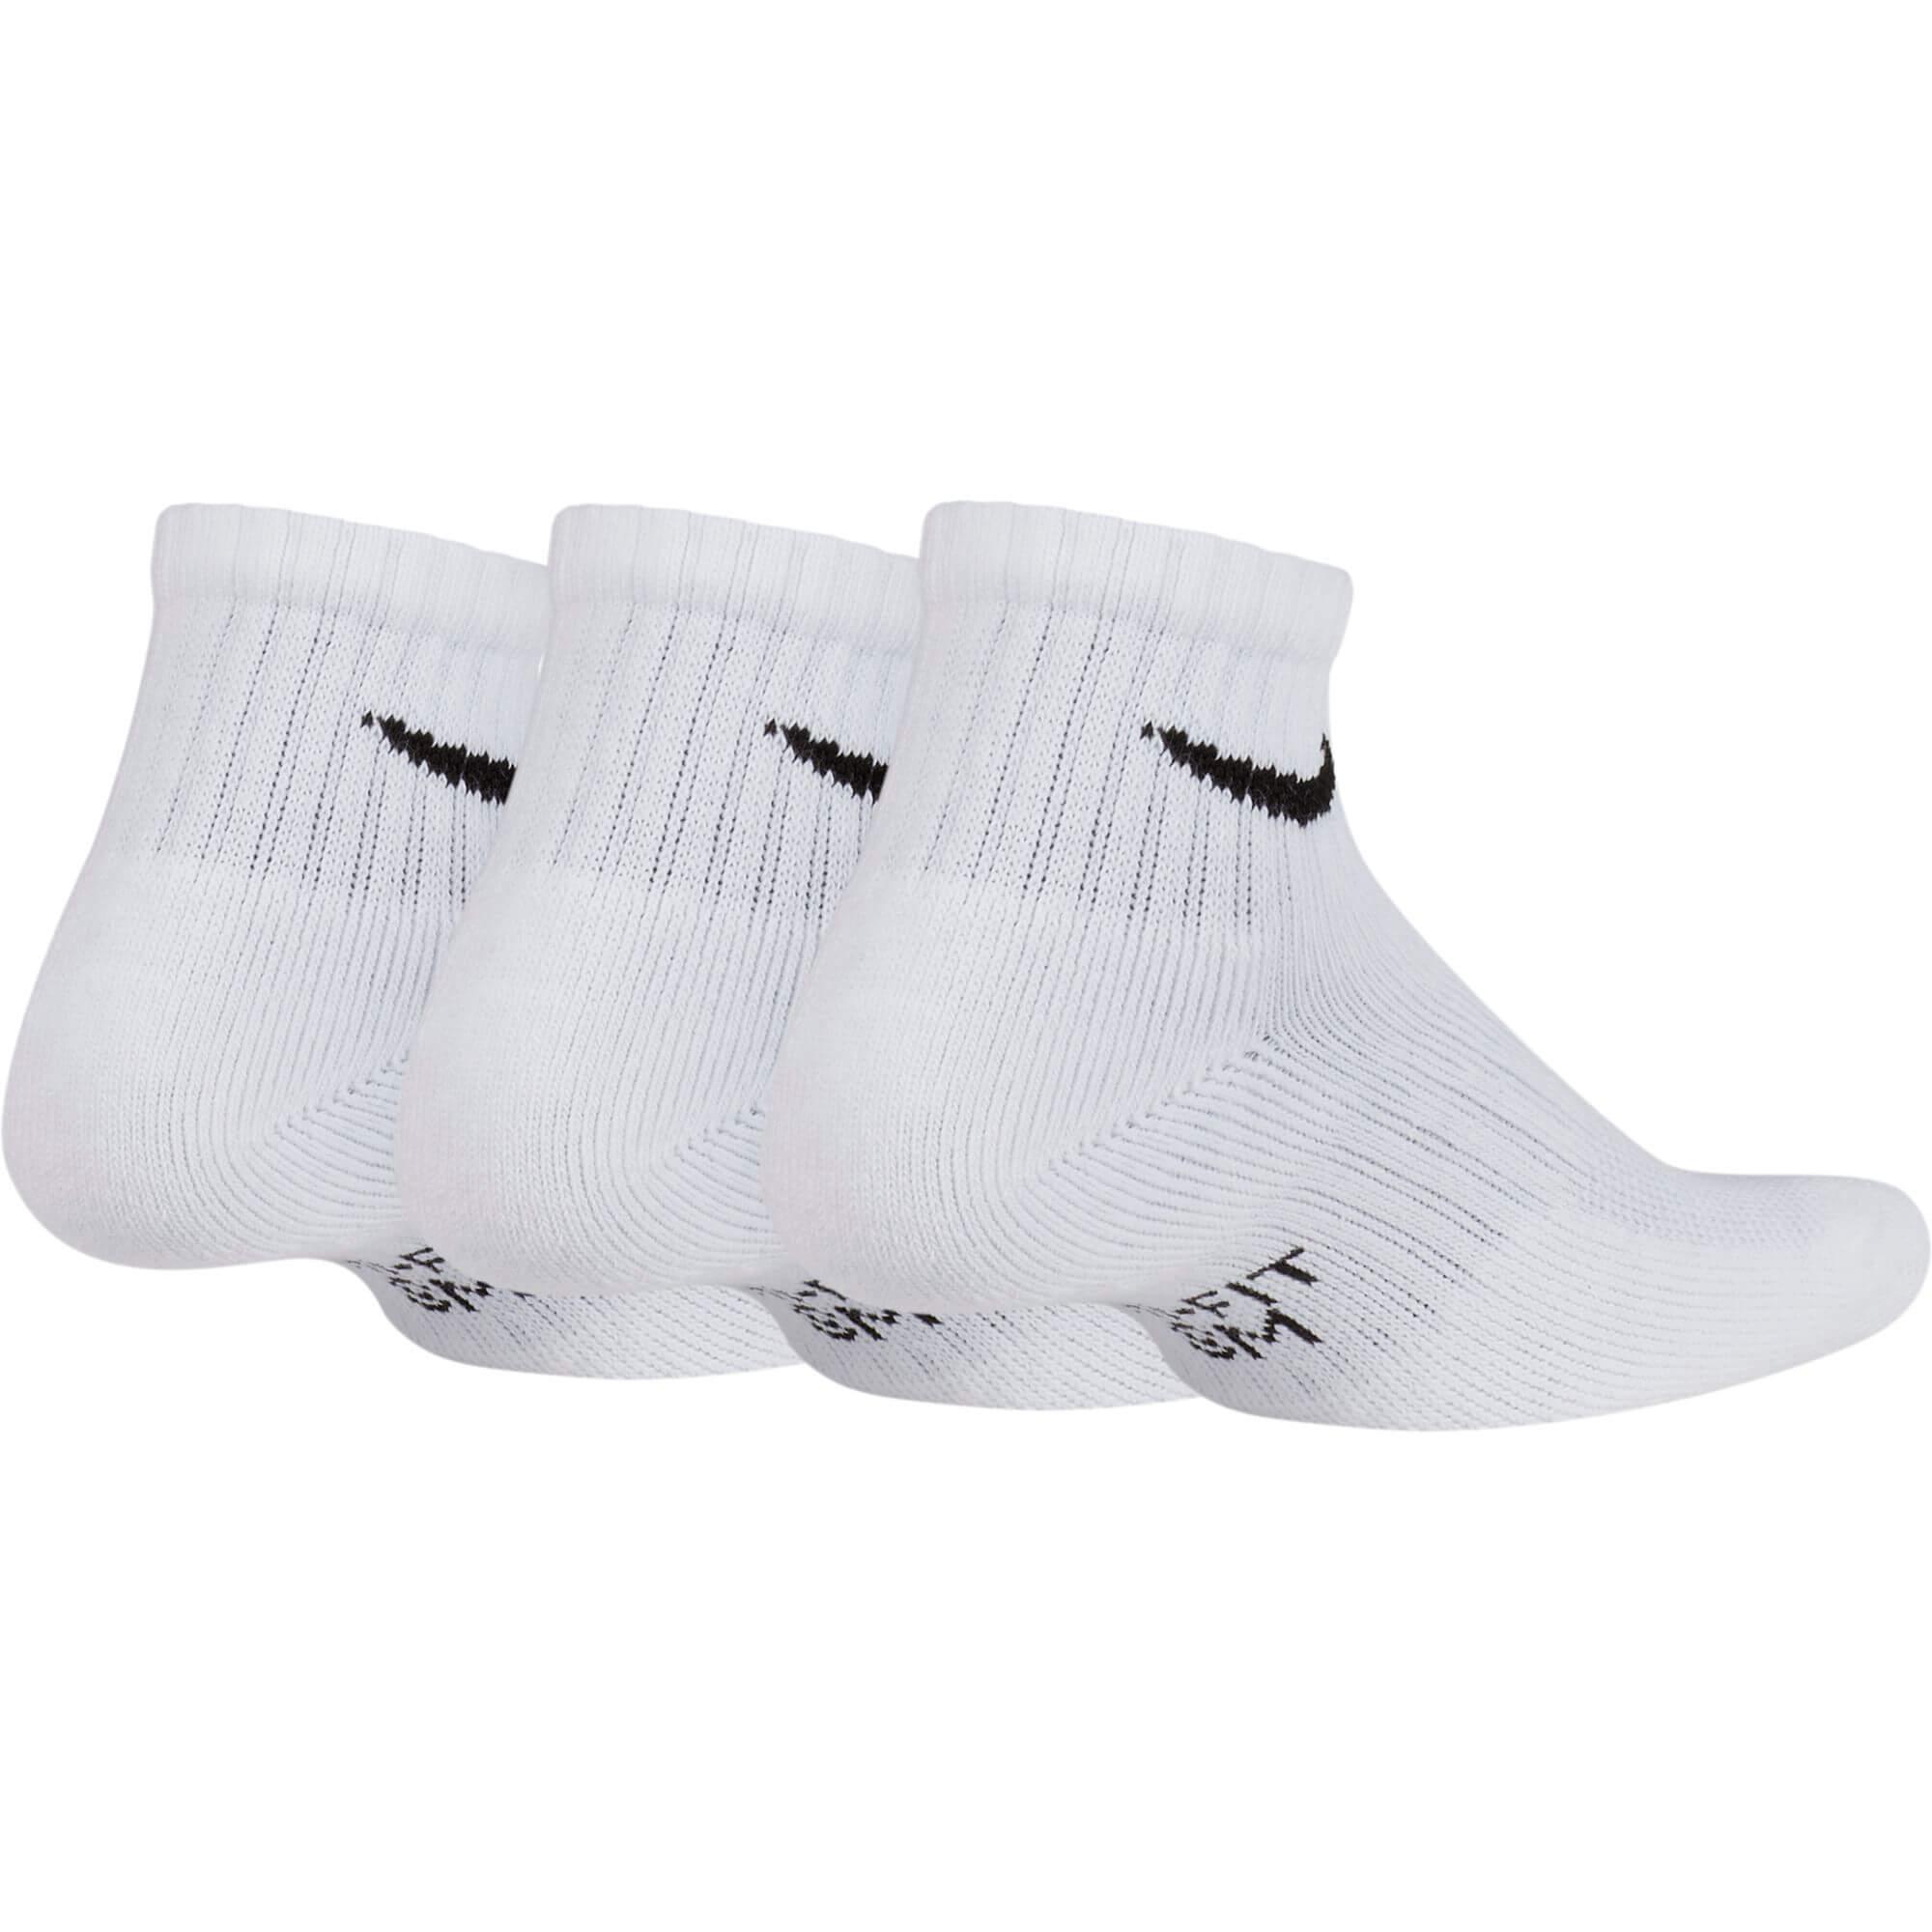 Nike Kids Performance Cushioned Quarter Tennis Socks (3 Pairs) - White ...